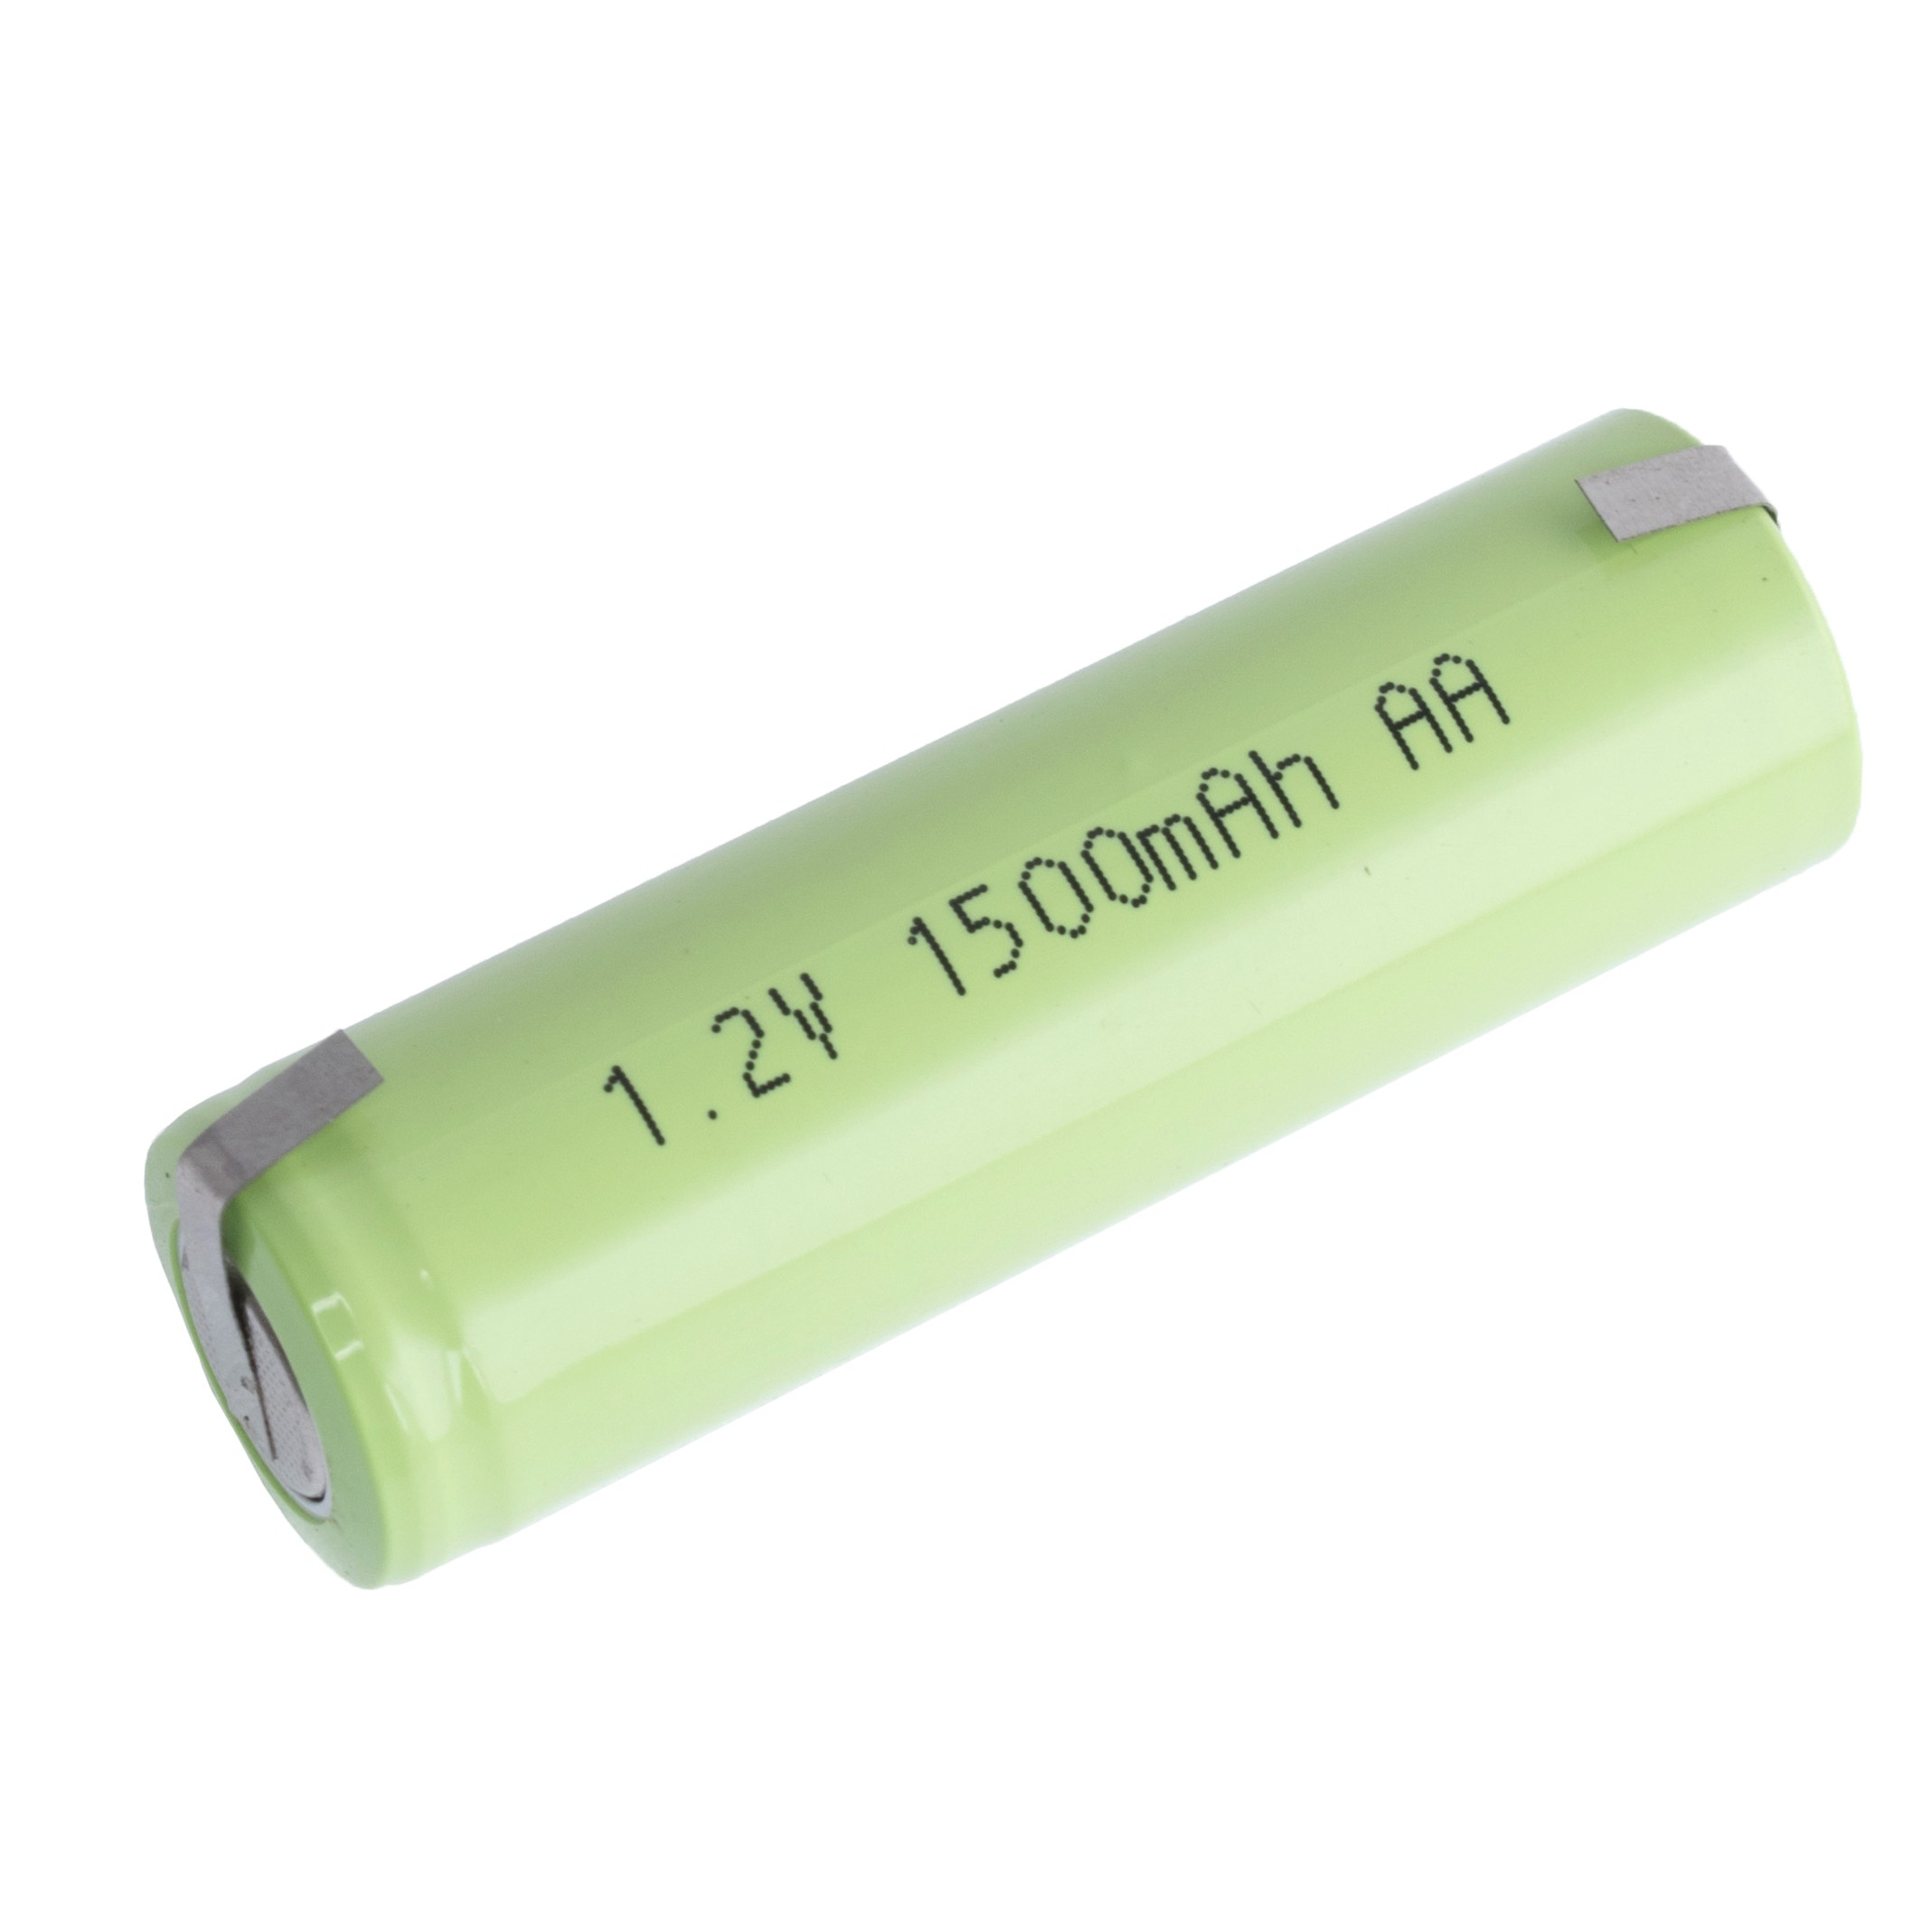 NiMH Battery Cell 1.2V 1500mAh AA flat top + Nickel